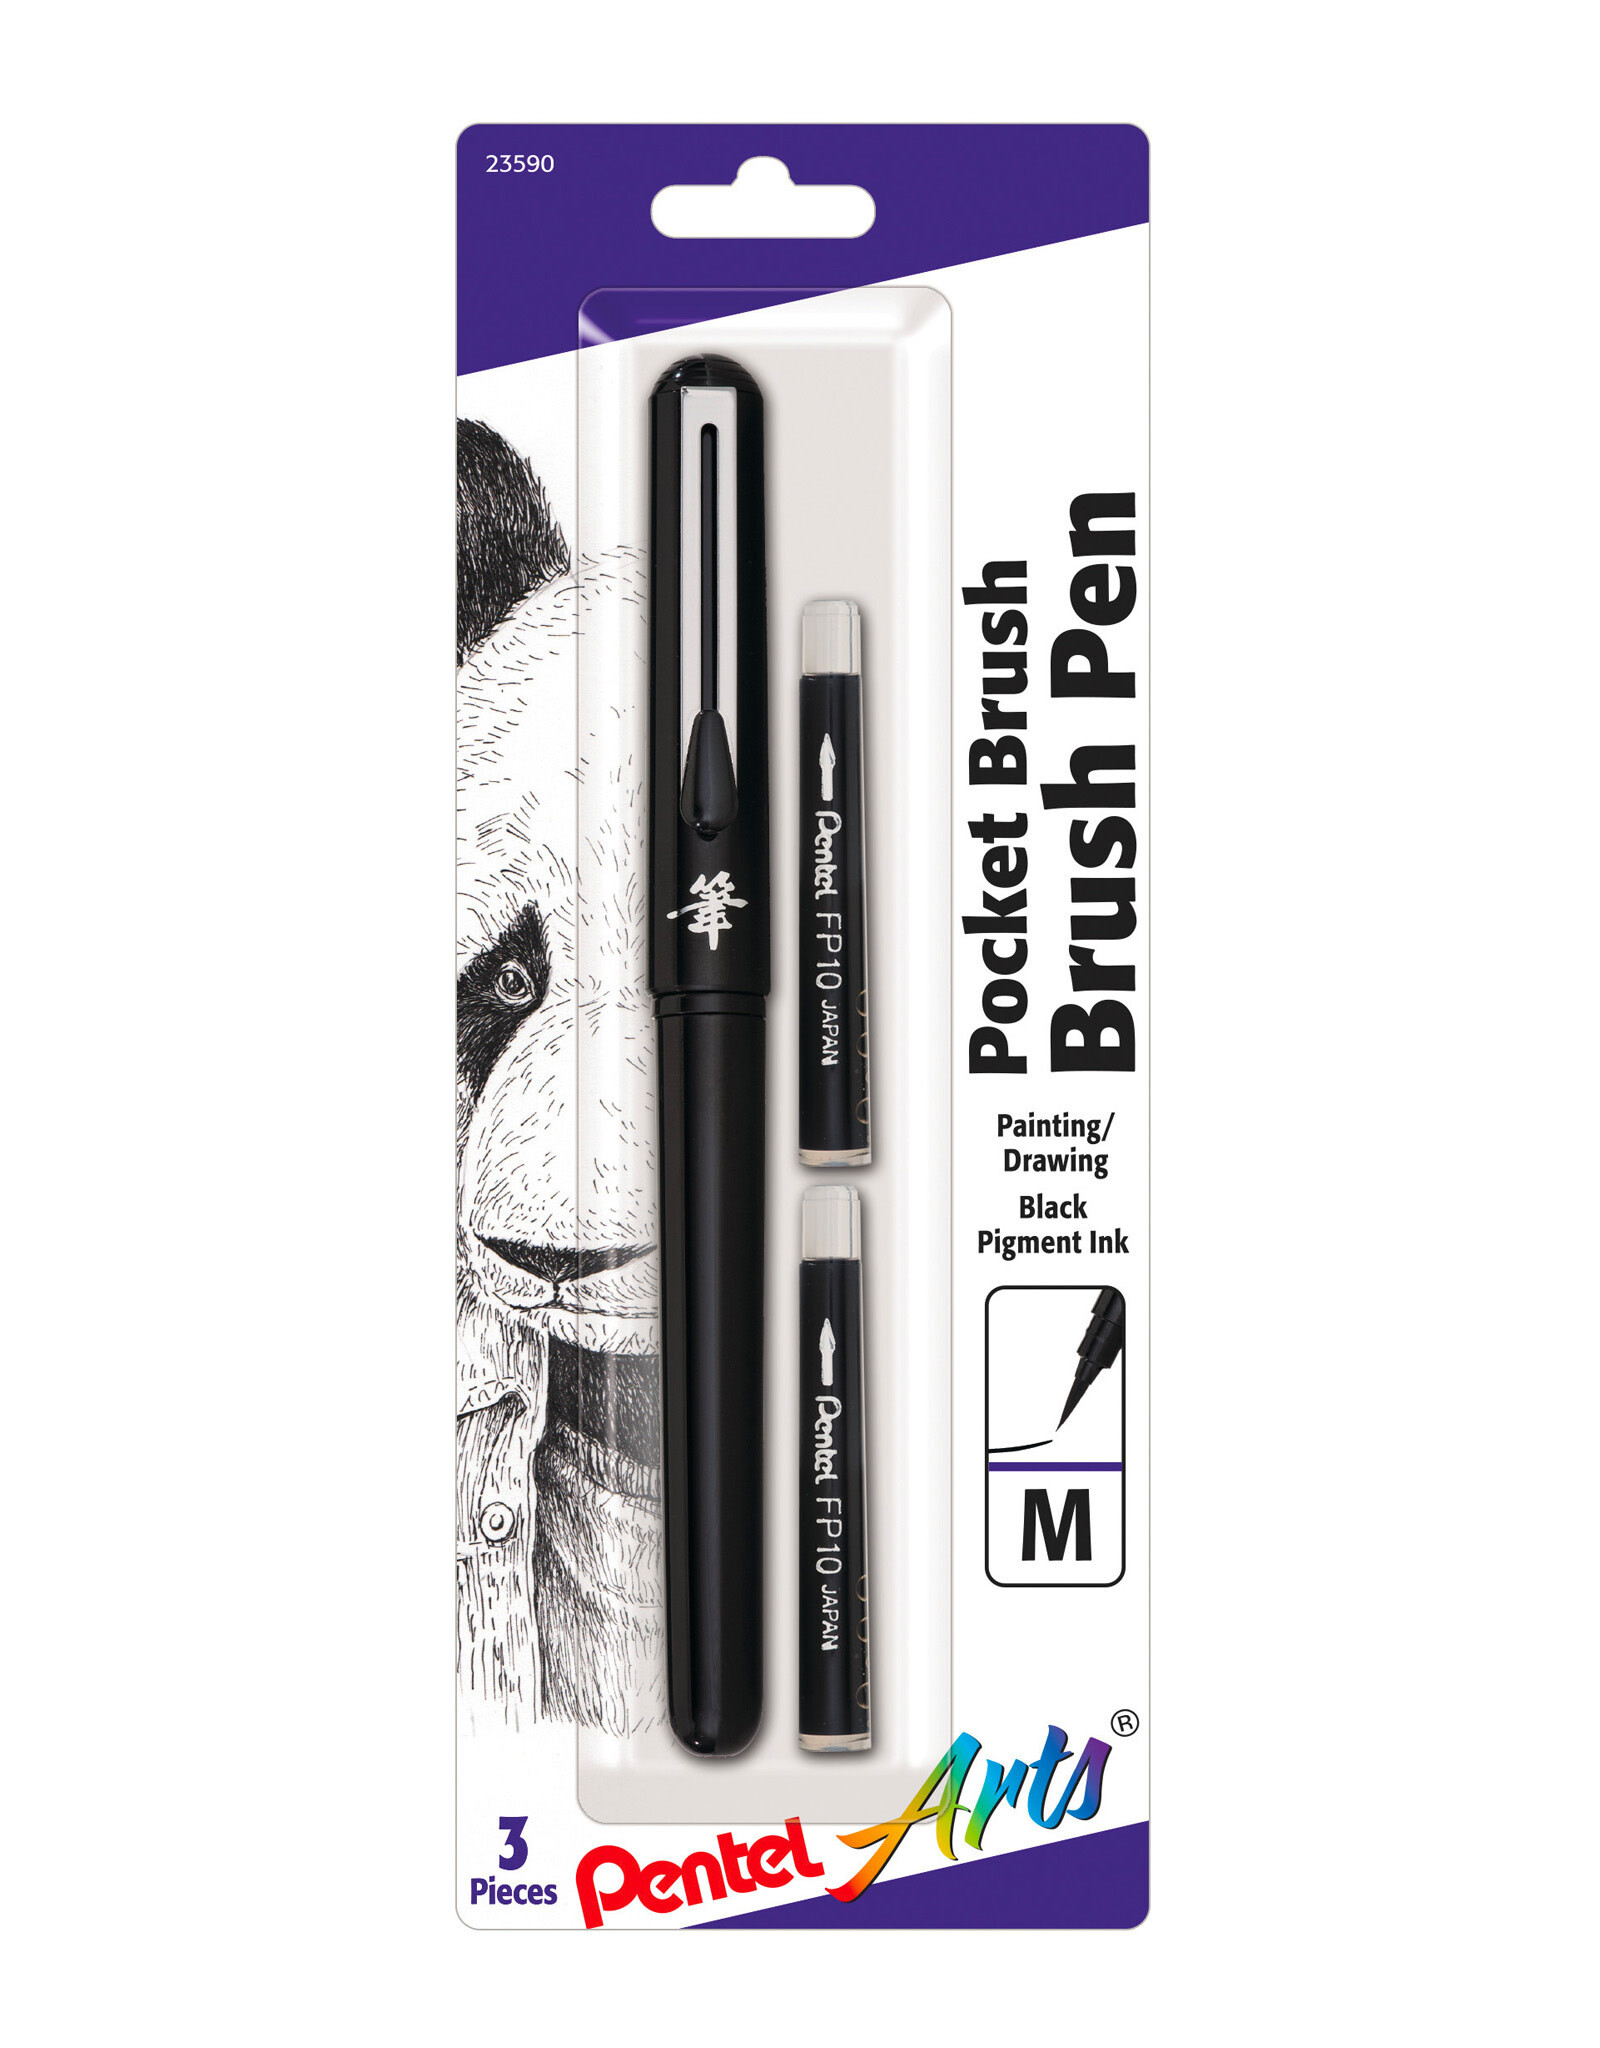 Pentel Pentel Arts Pocket Brush Pen with Refills